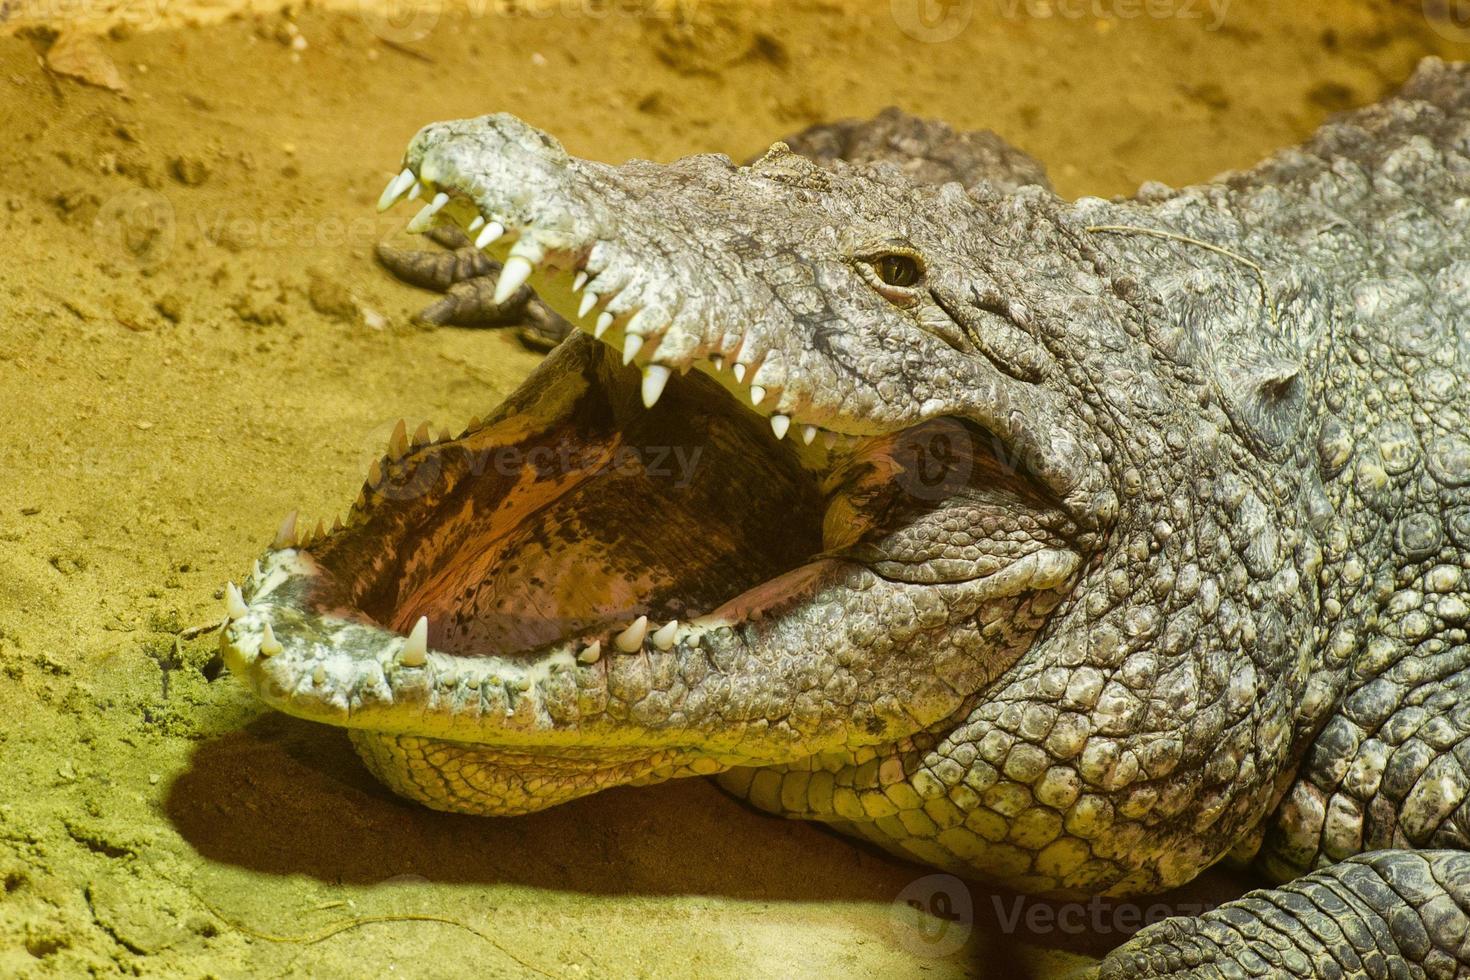 boca de crocodilo bem aberta foto